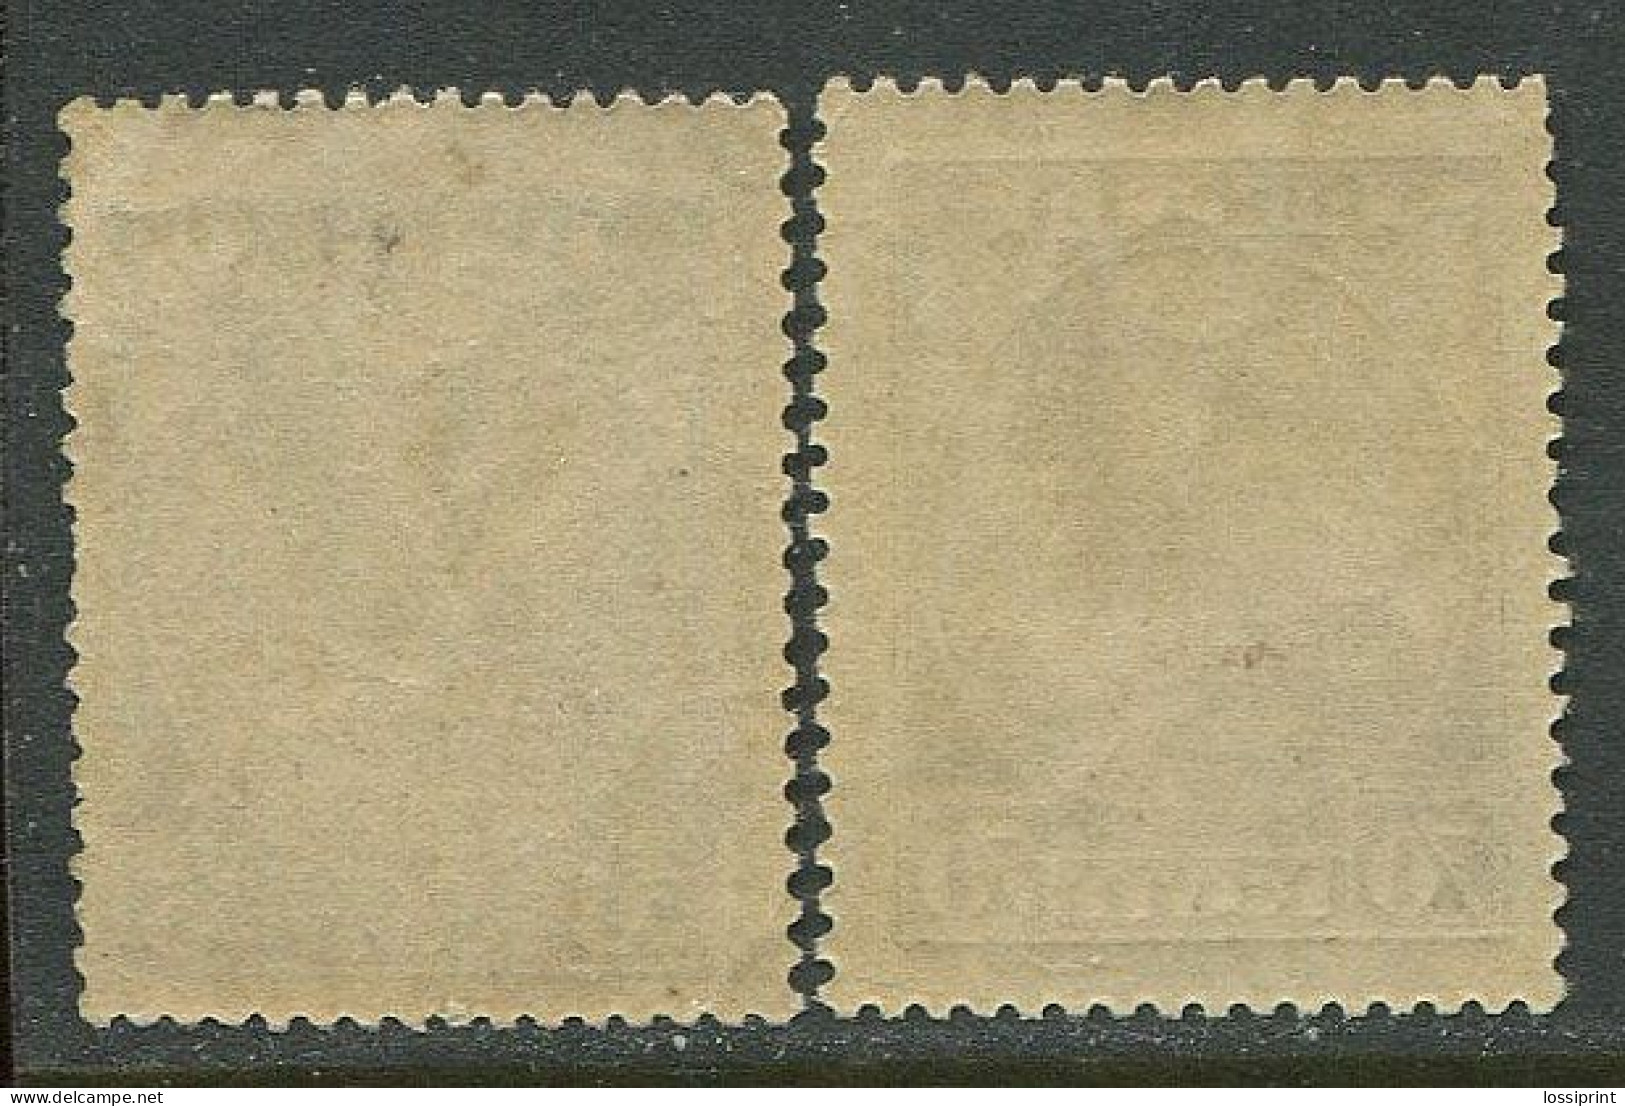 Russia:Unused Stamps 1918, MNH - Nuovi